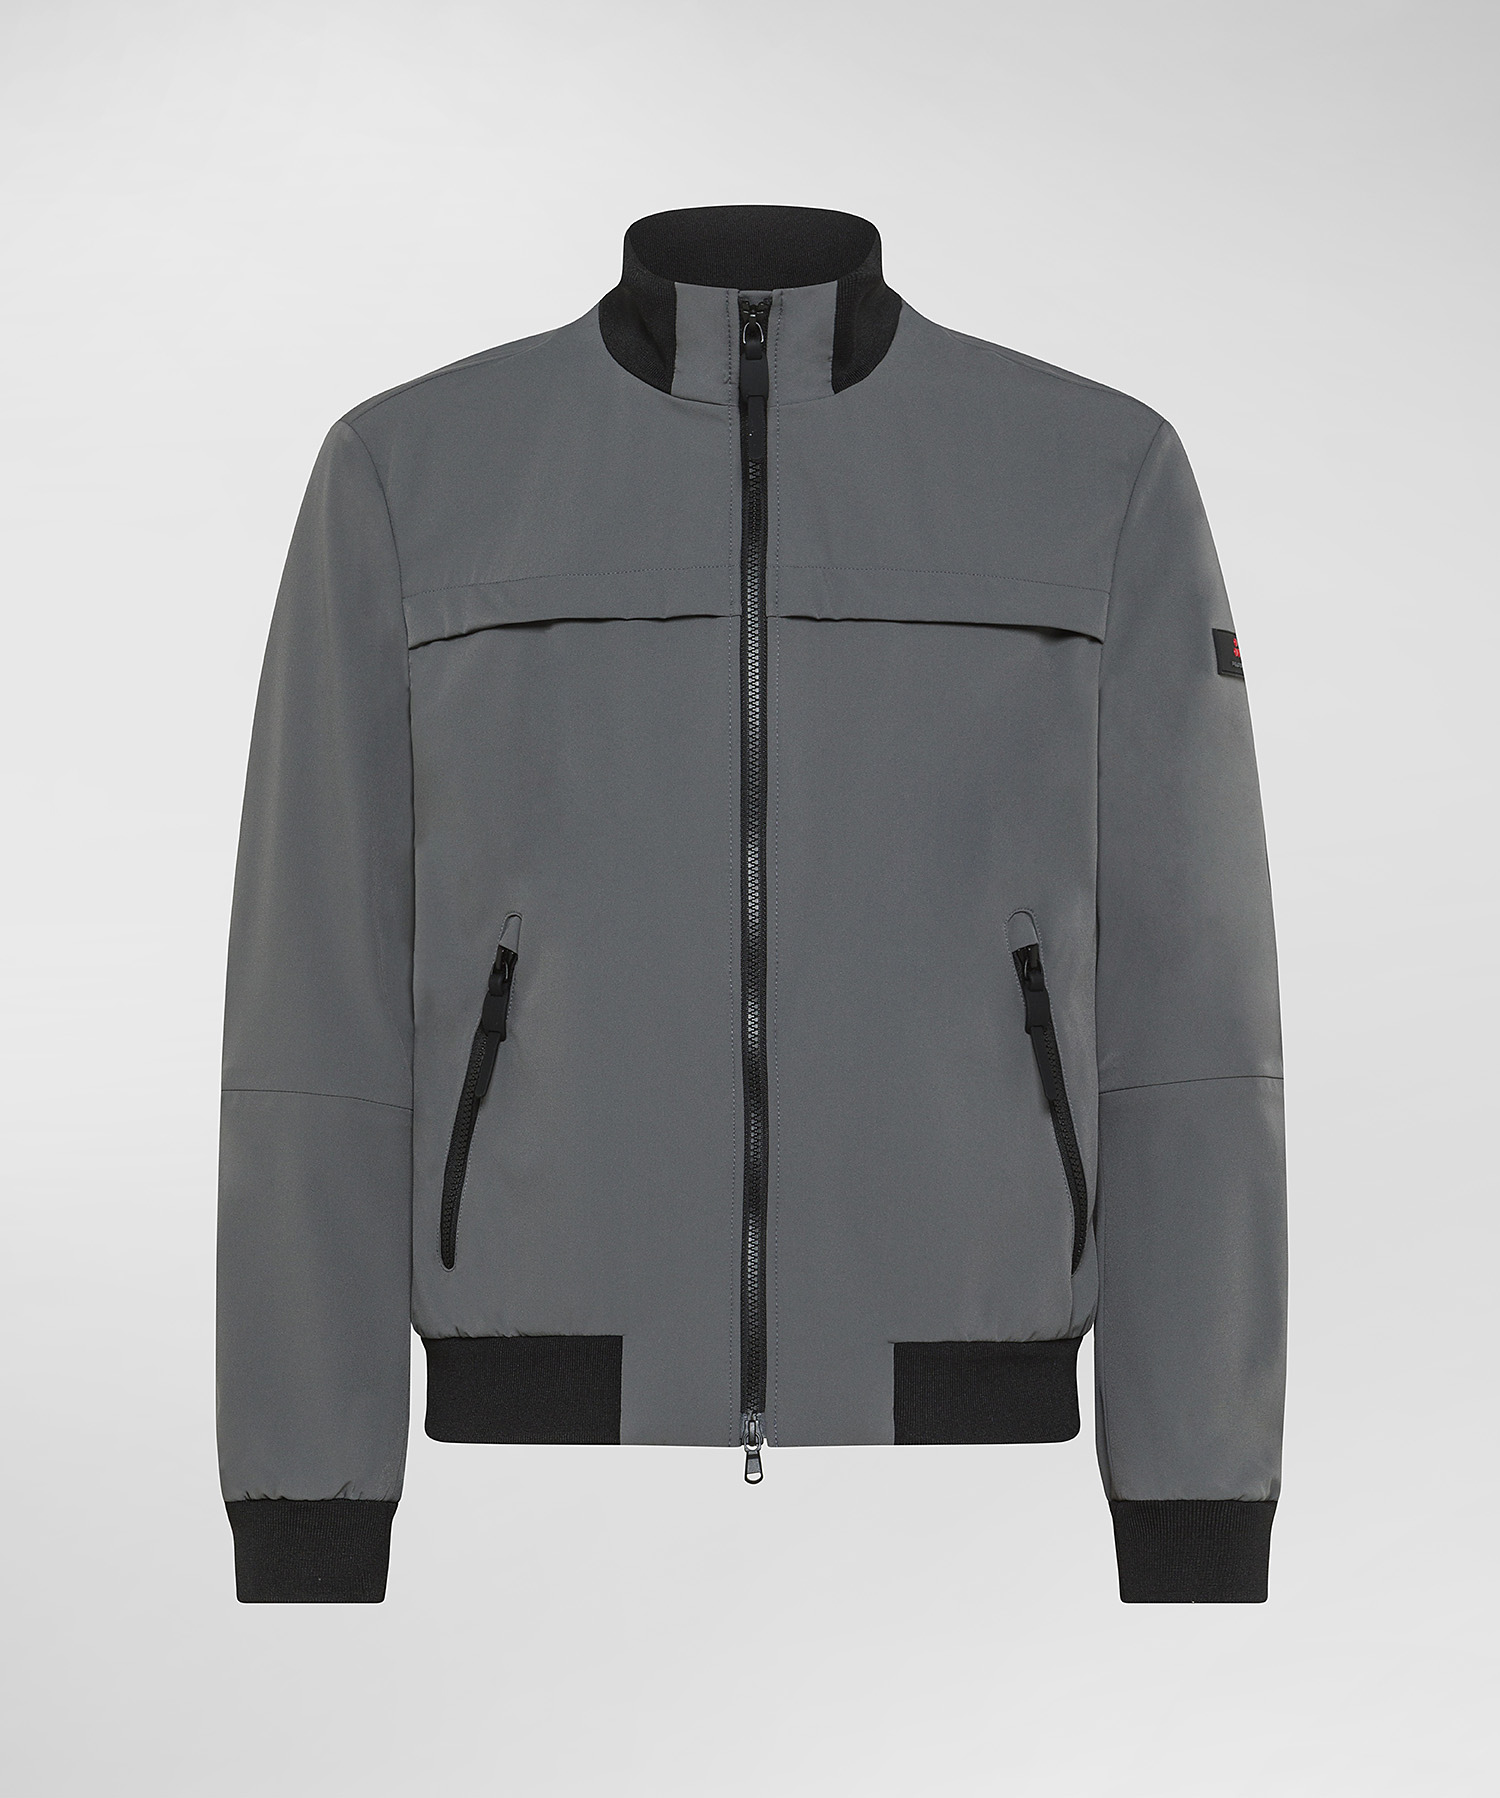 Smooth bomber jacket with black details for men, grey | Peuterey